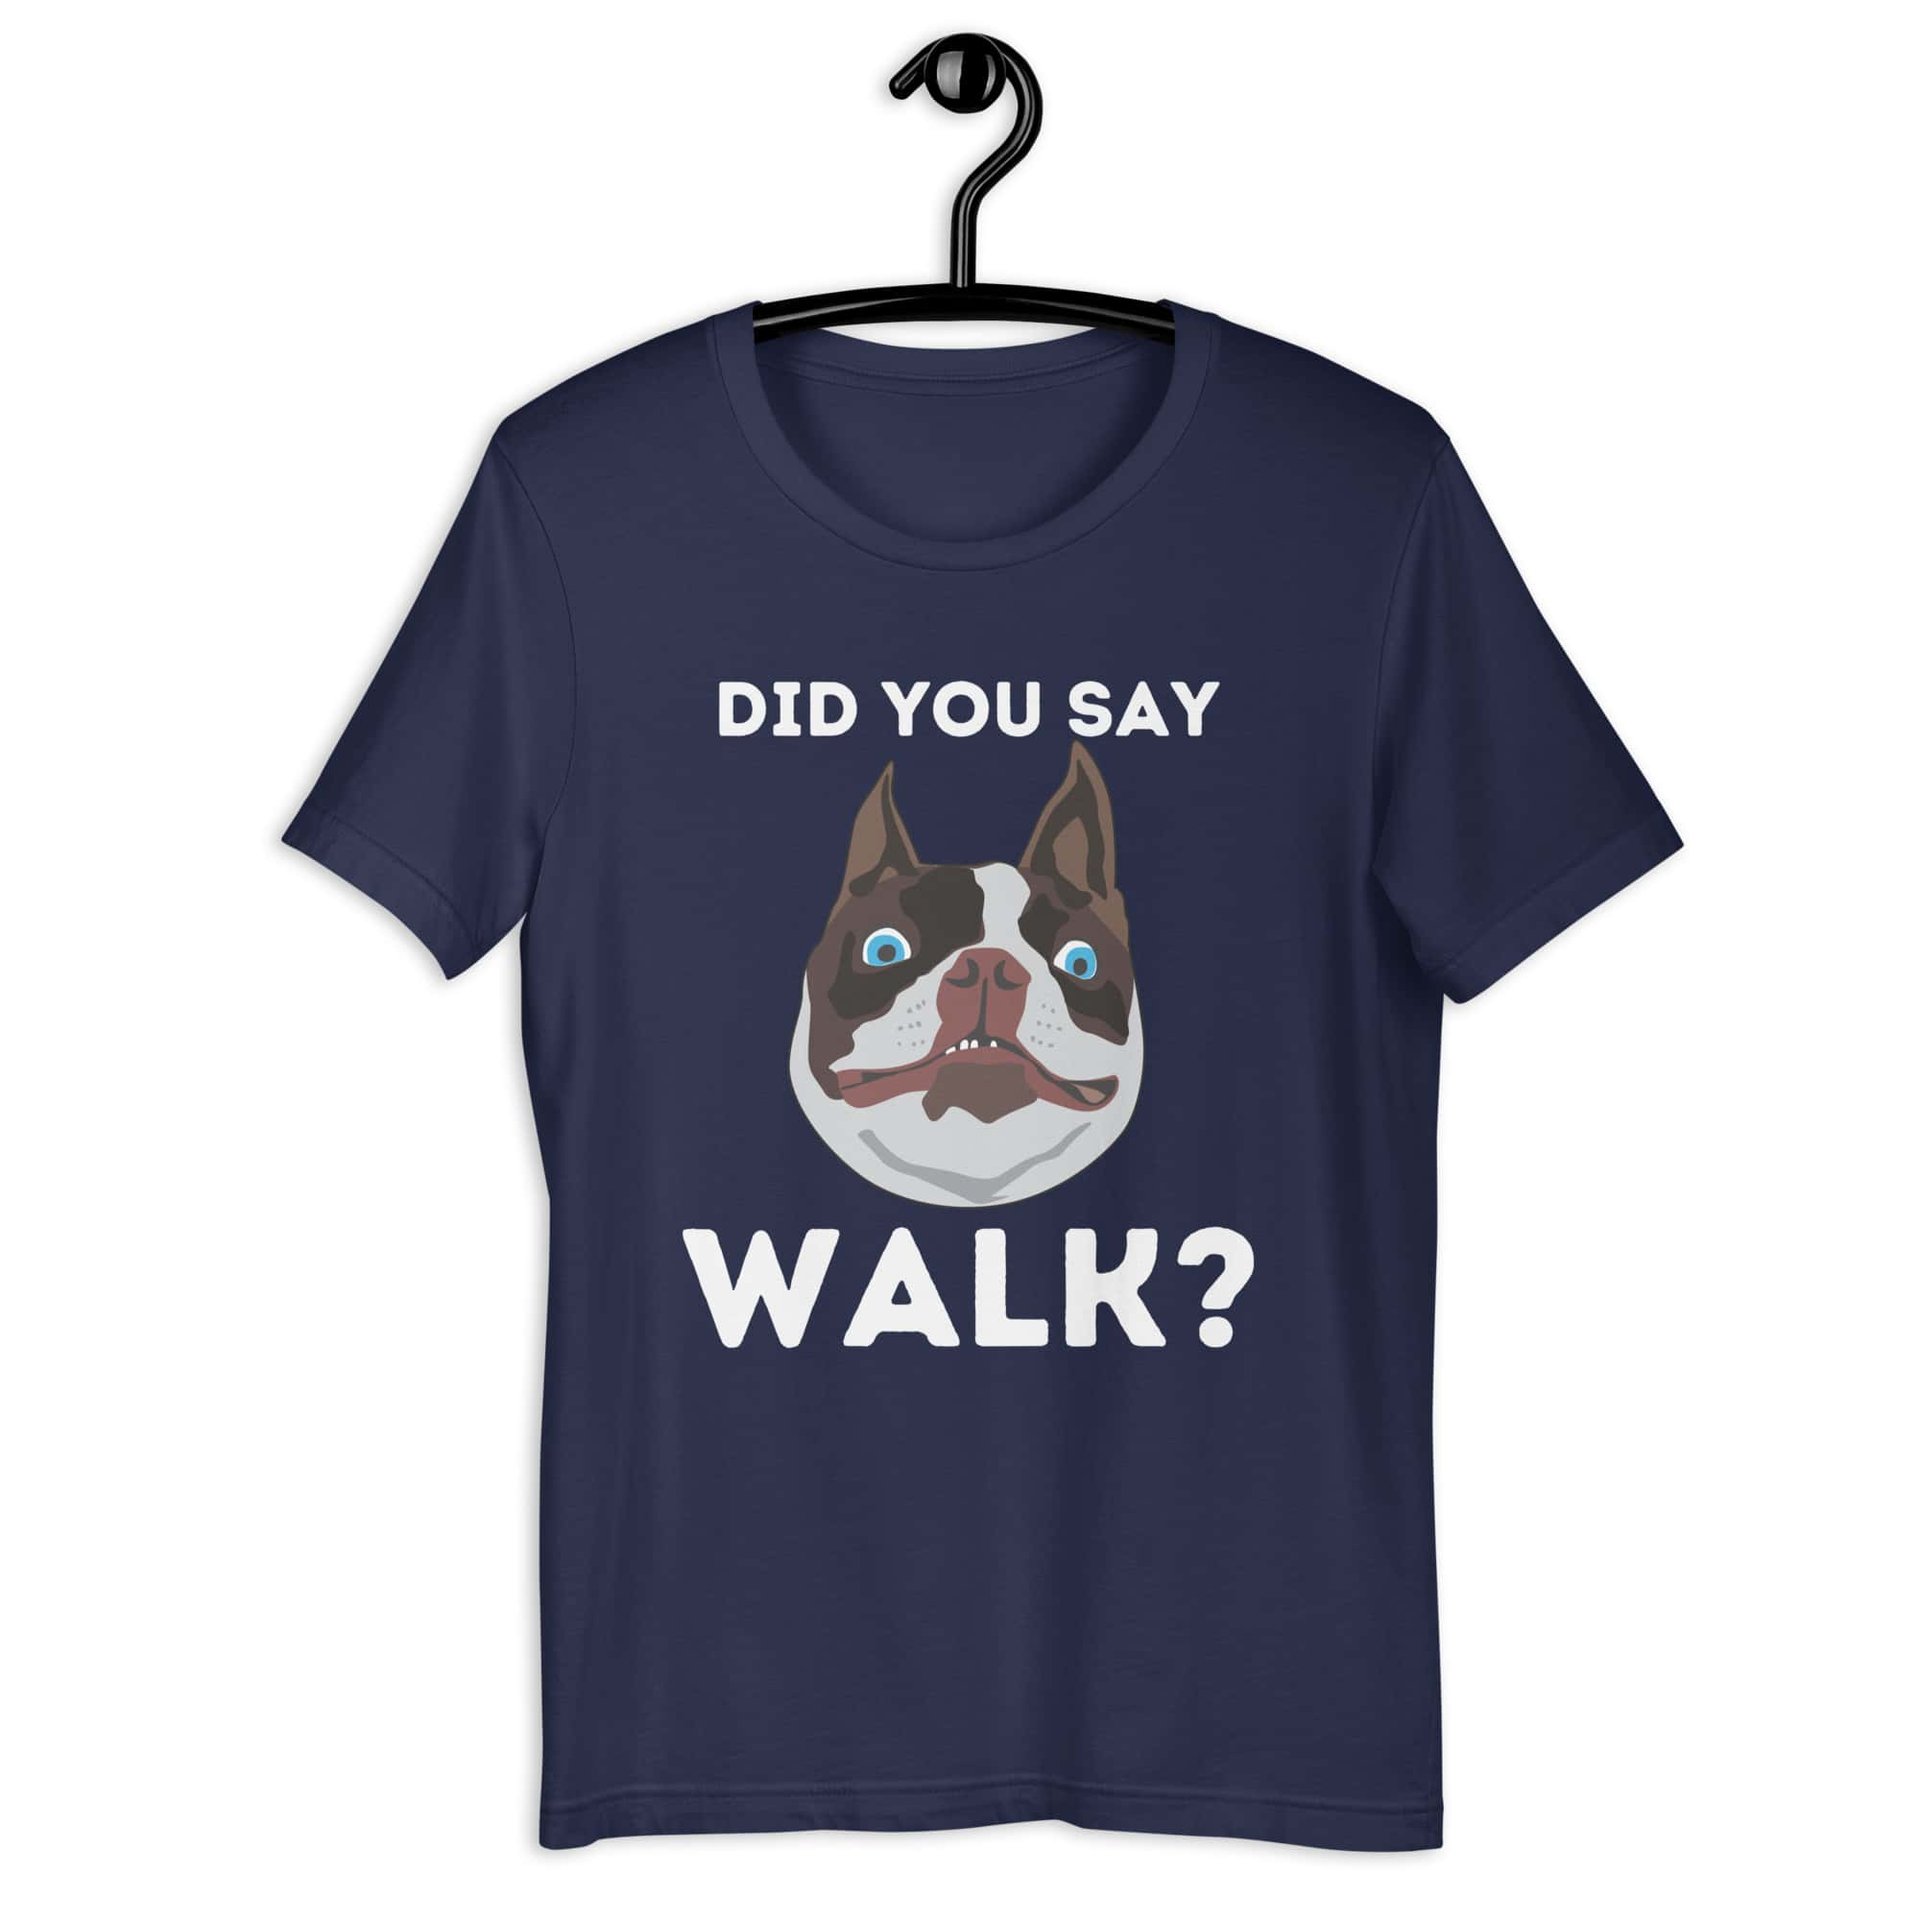 "Did You Say Walk?" Funny Dog Unisex T-Shirt. Navy